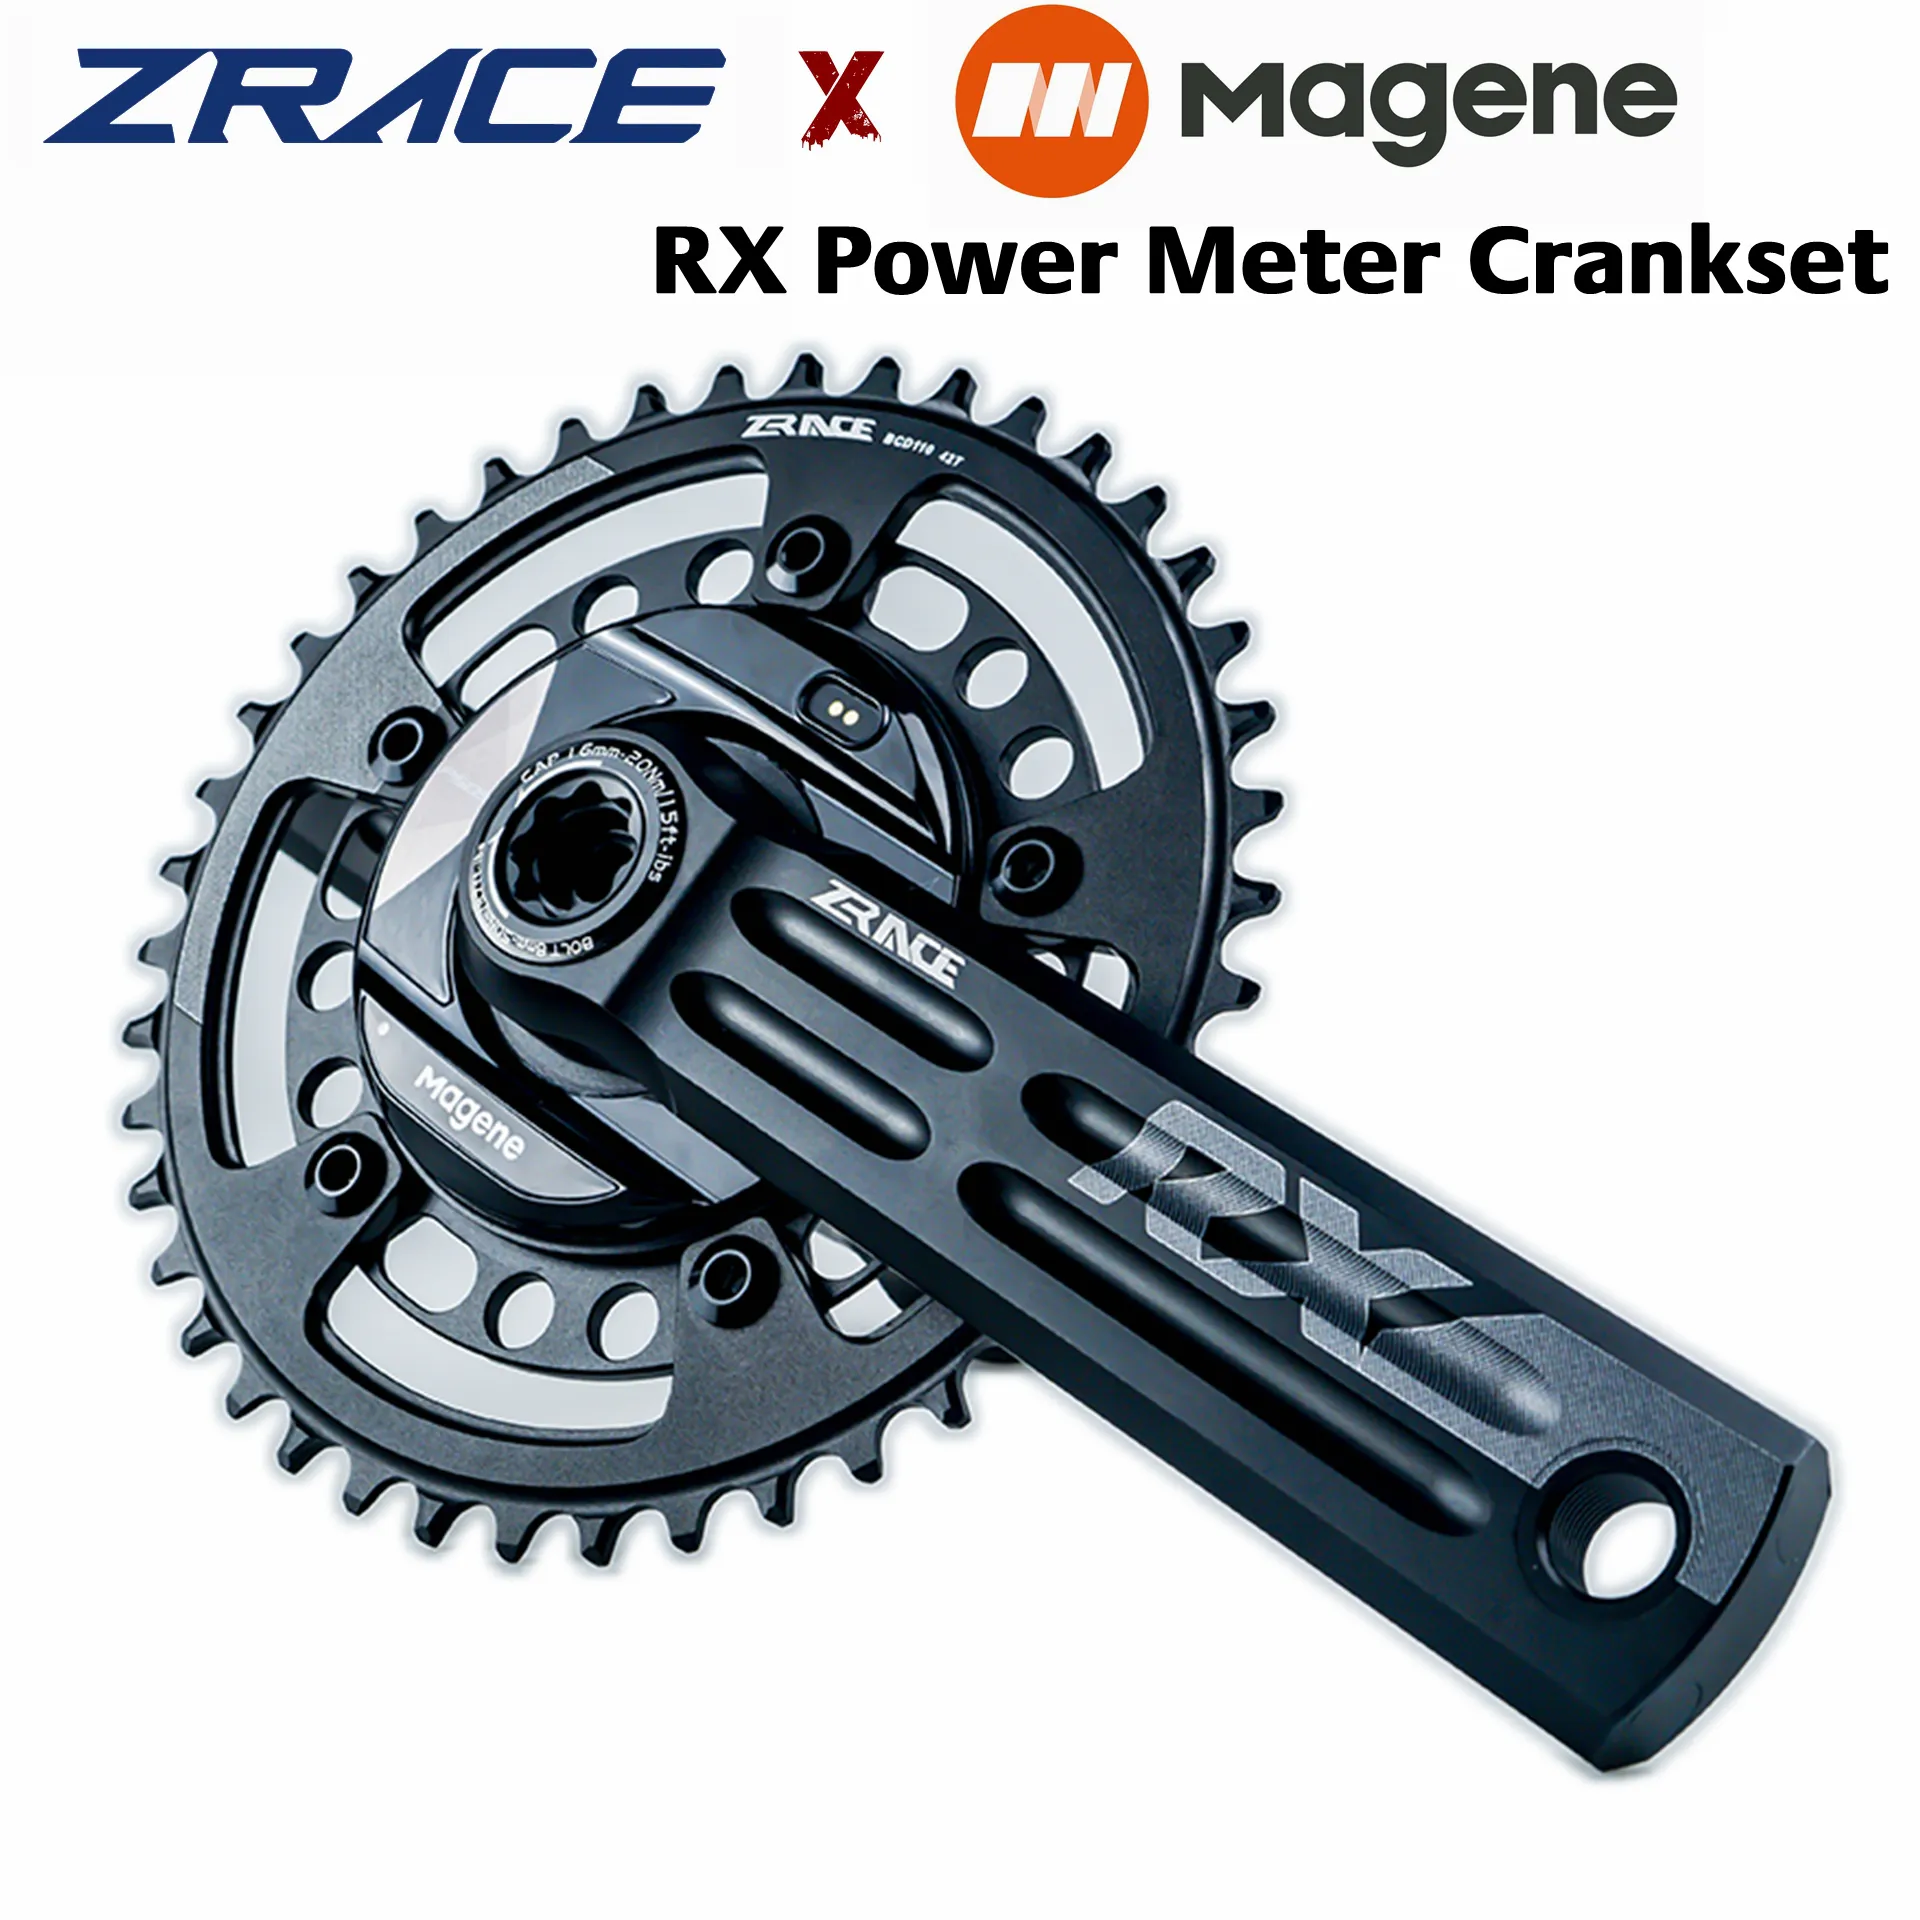 Zrace x Magene Rx Power Meter Crankset 2 x 10/11/12 Speed ​​Chainset, Dub Bottom Bracket, Power Crank, P505 Power Meter Spider